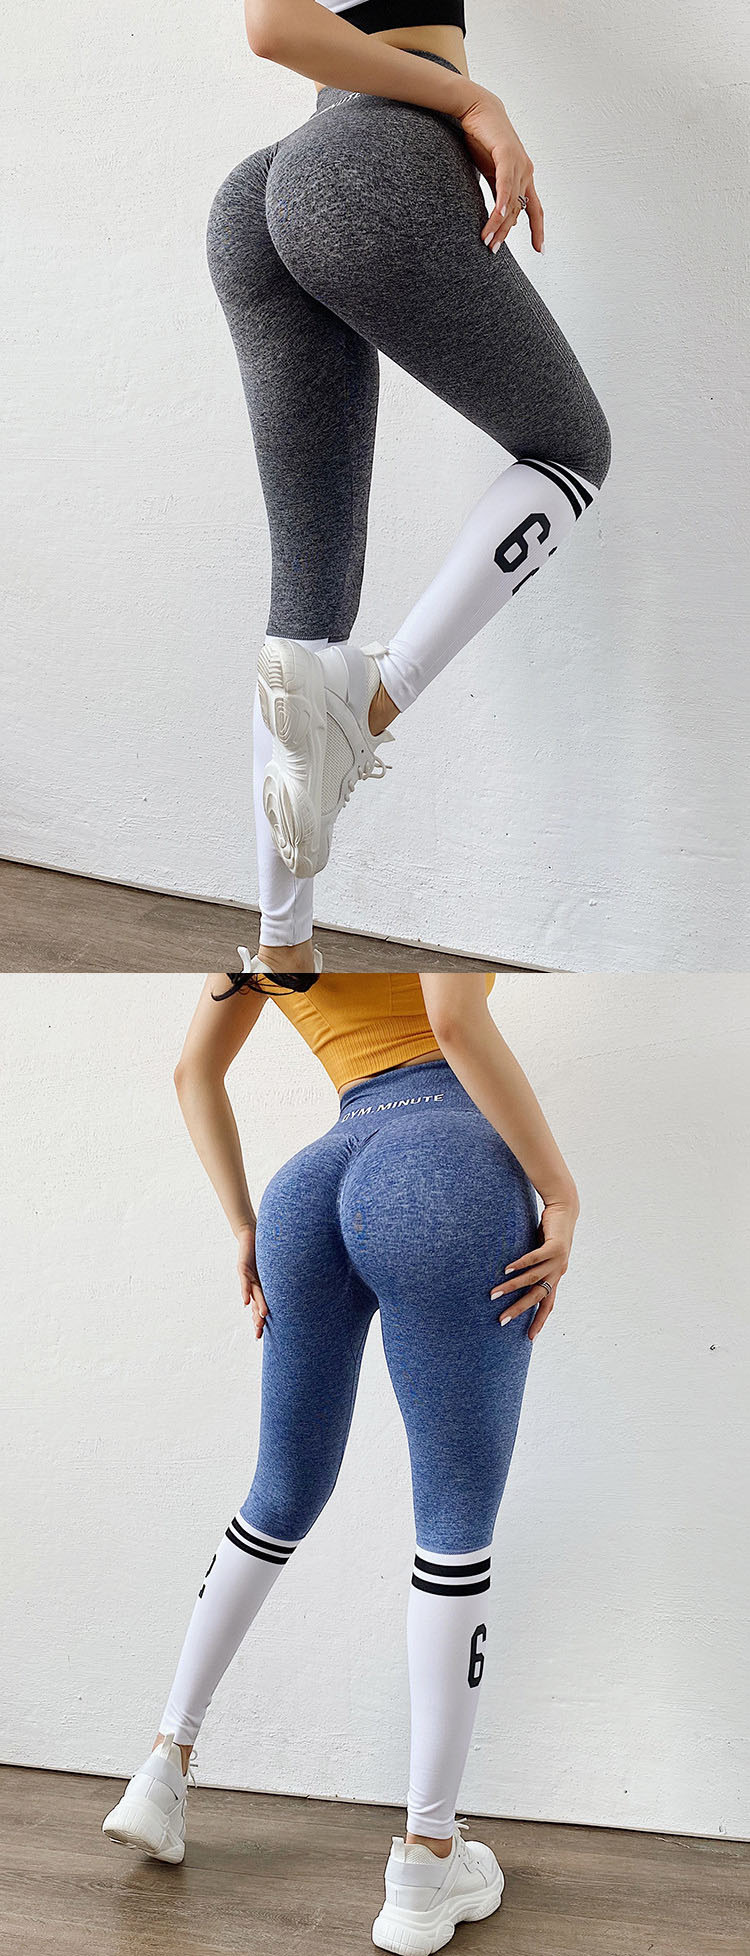 The buttocks design outlines a sexy arc.